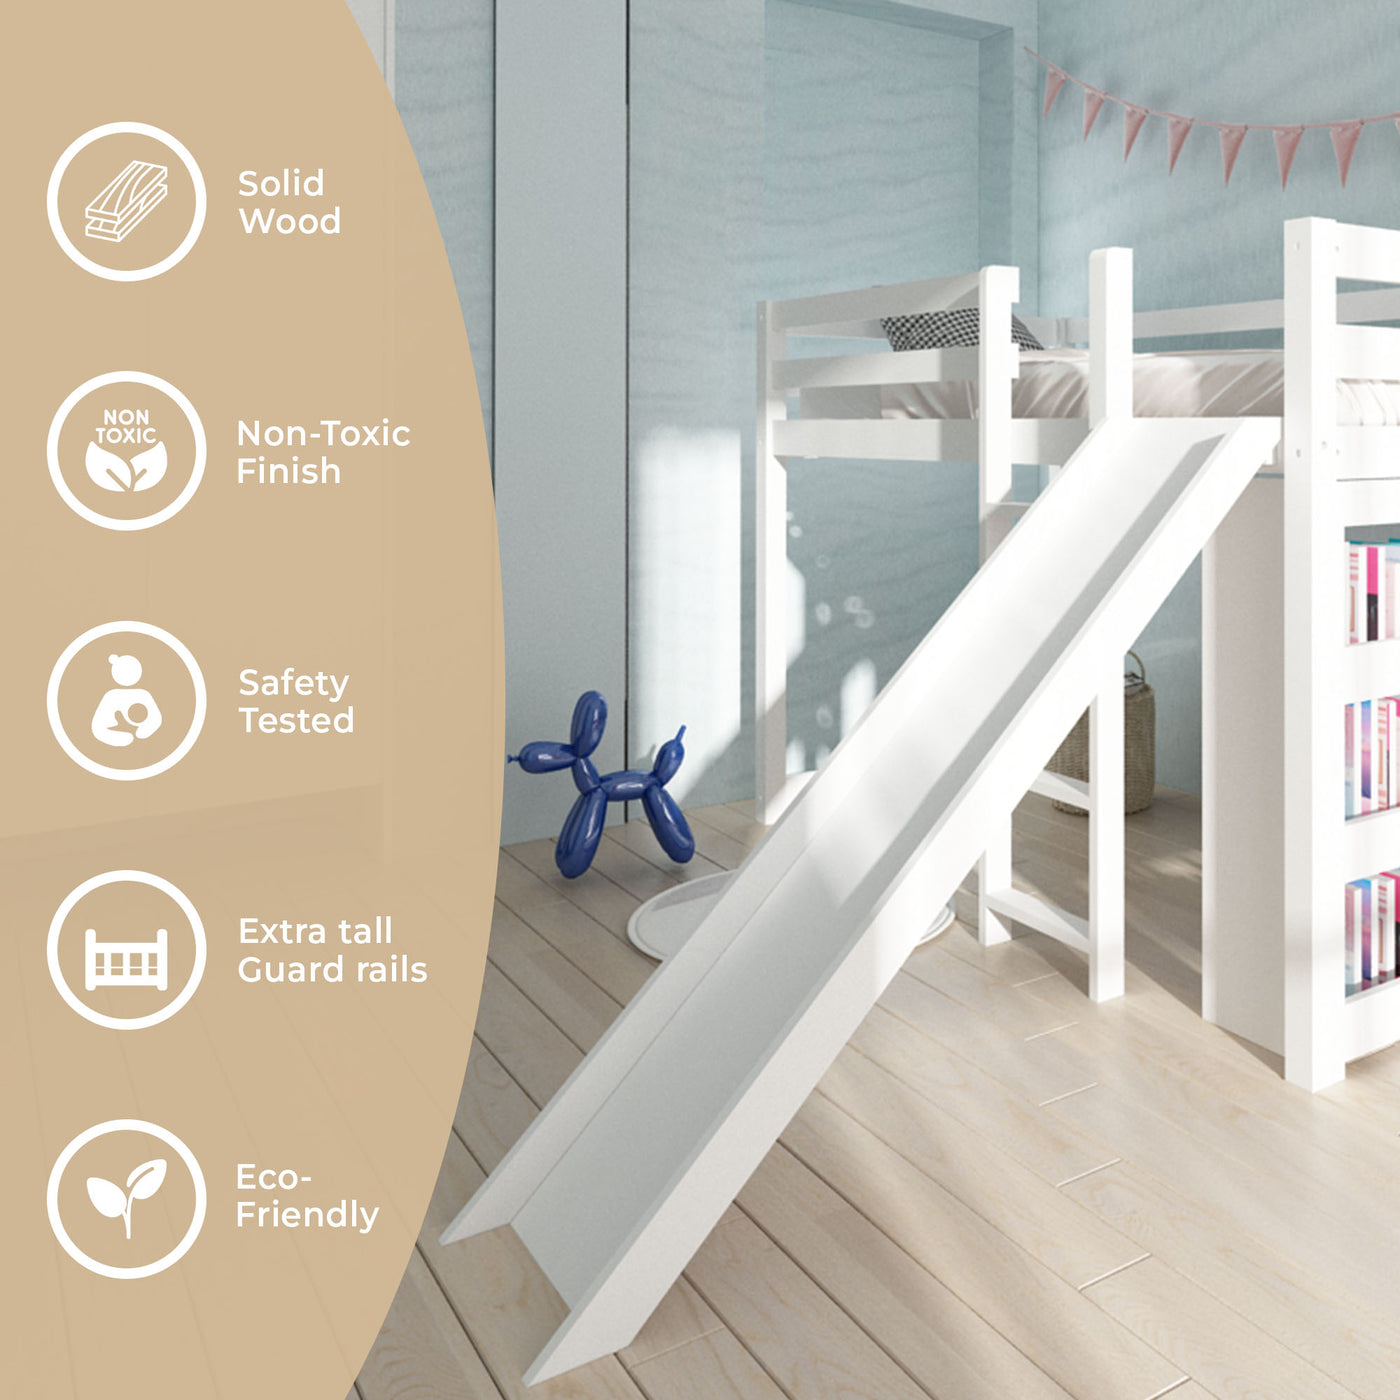 Harper Twin Loft Bed with Slide & Built-In Shelving Custom Kids Furniture